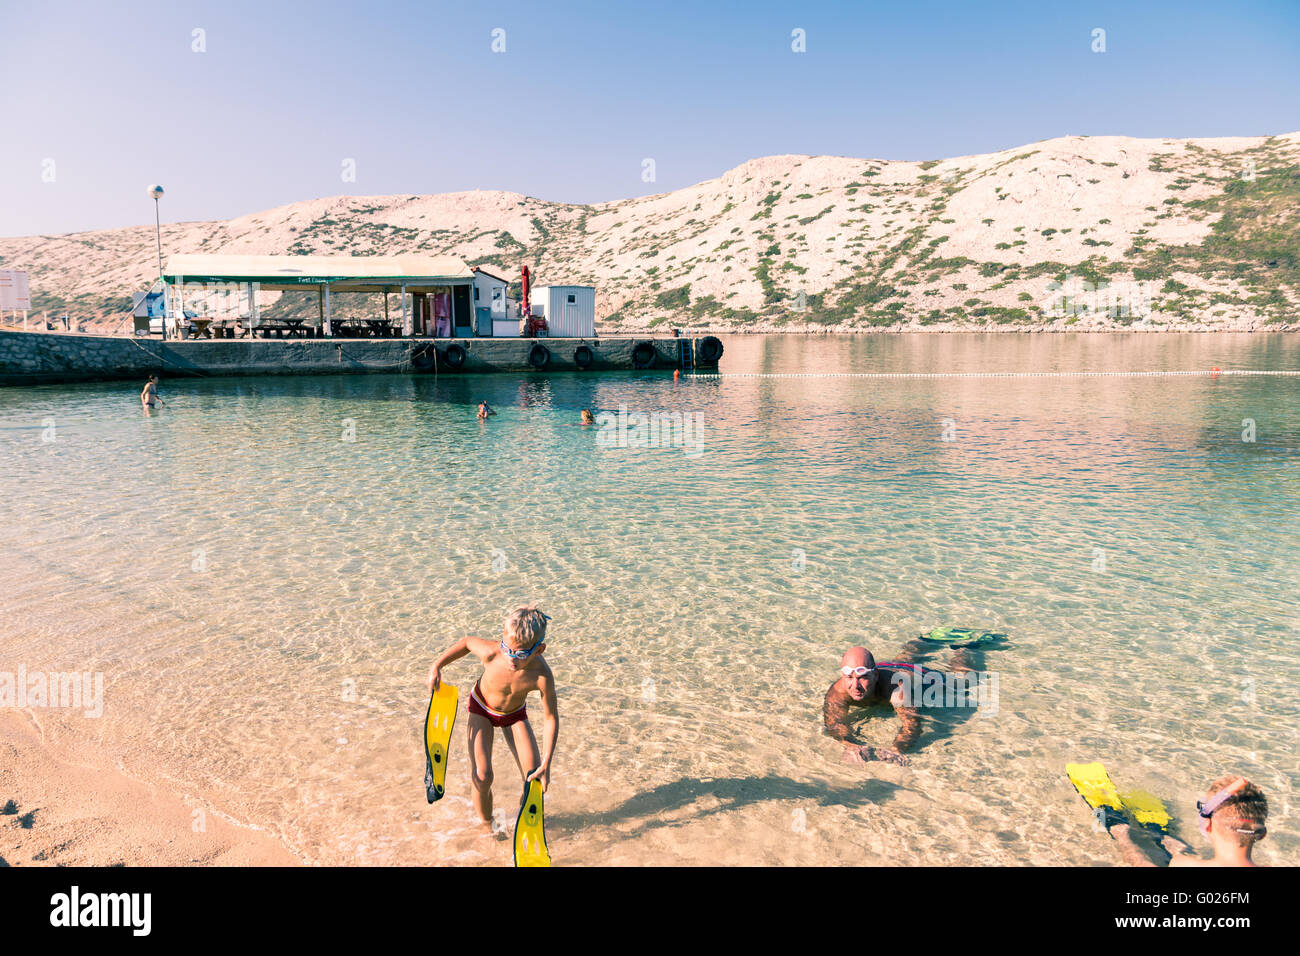 Rab, Croatia - August 9, 2015: Snorkeling in the clear waters of the island of Rab, Croatia. Stock Photo